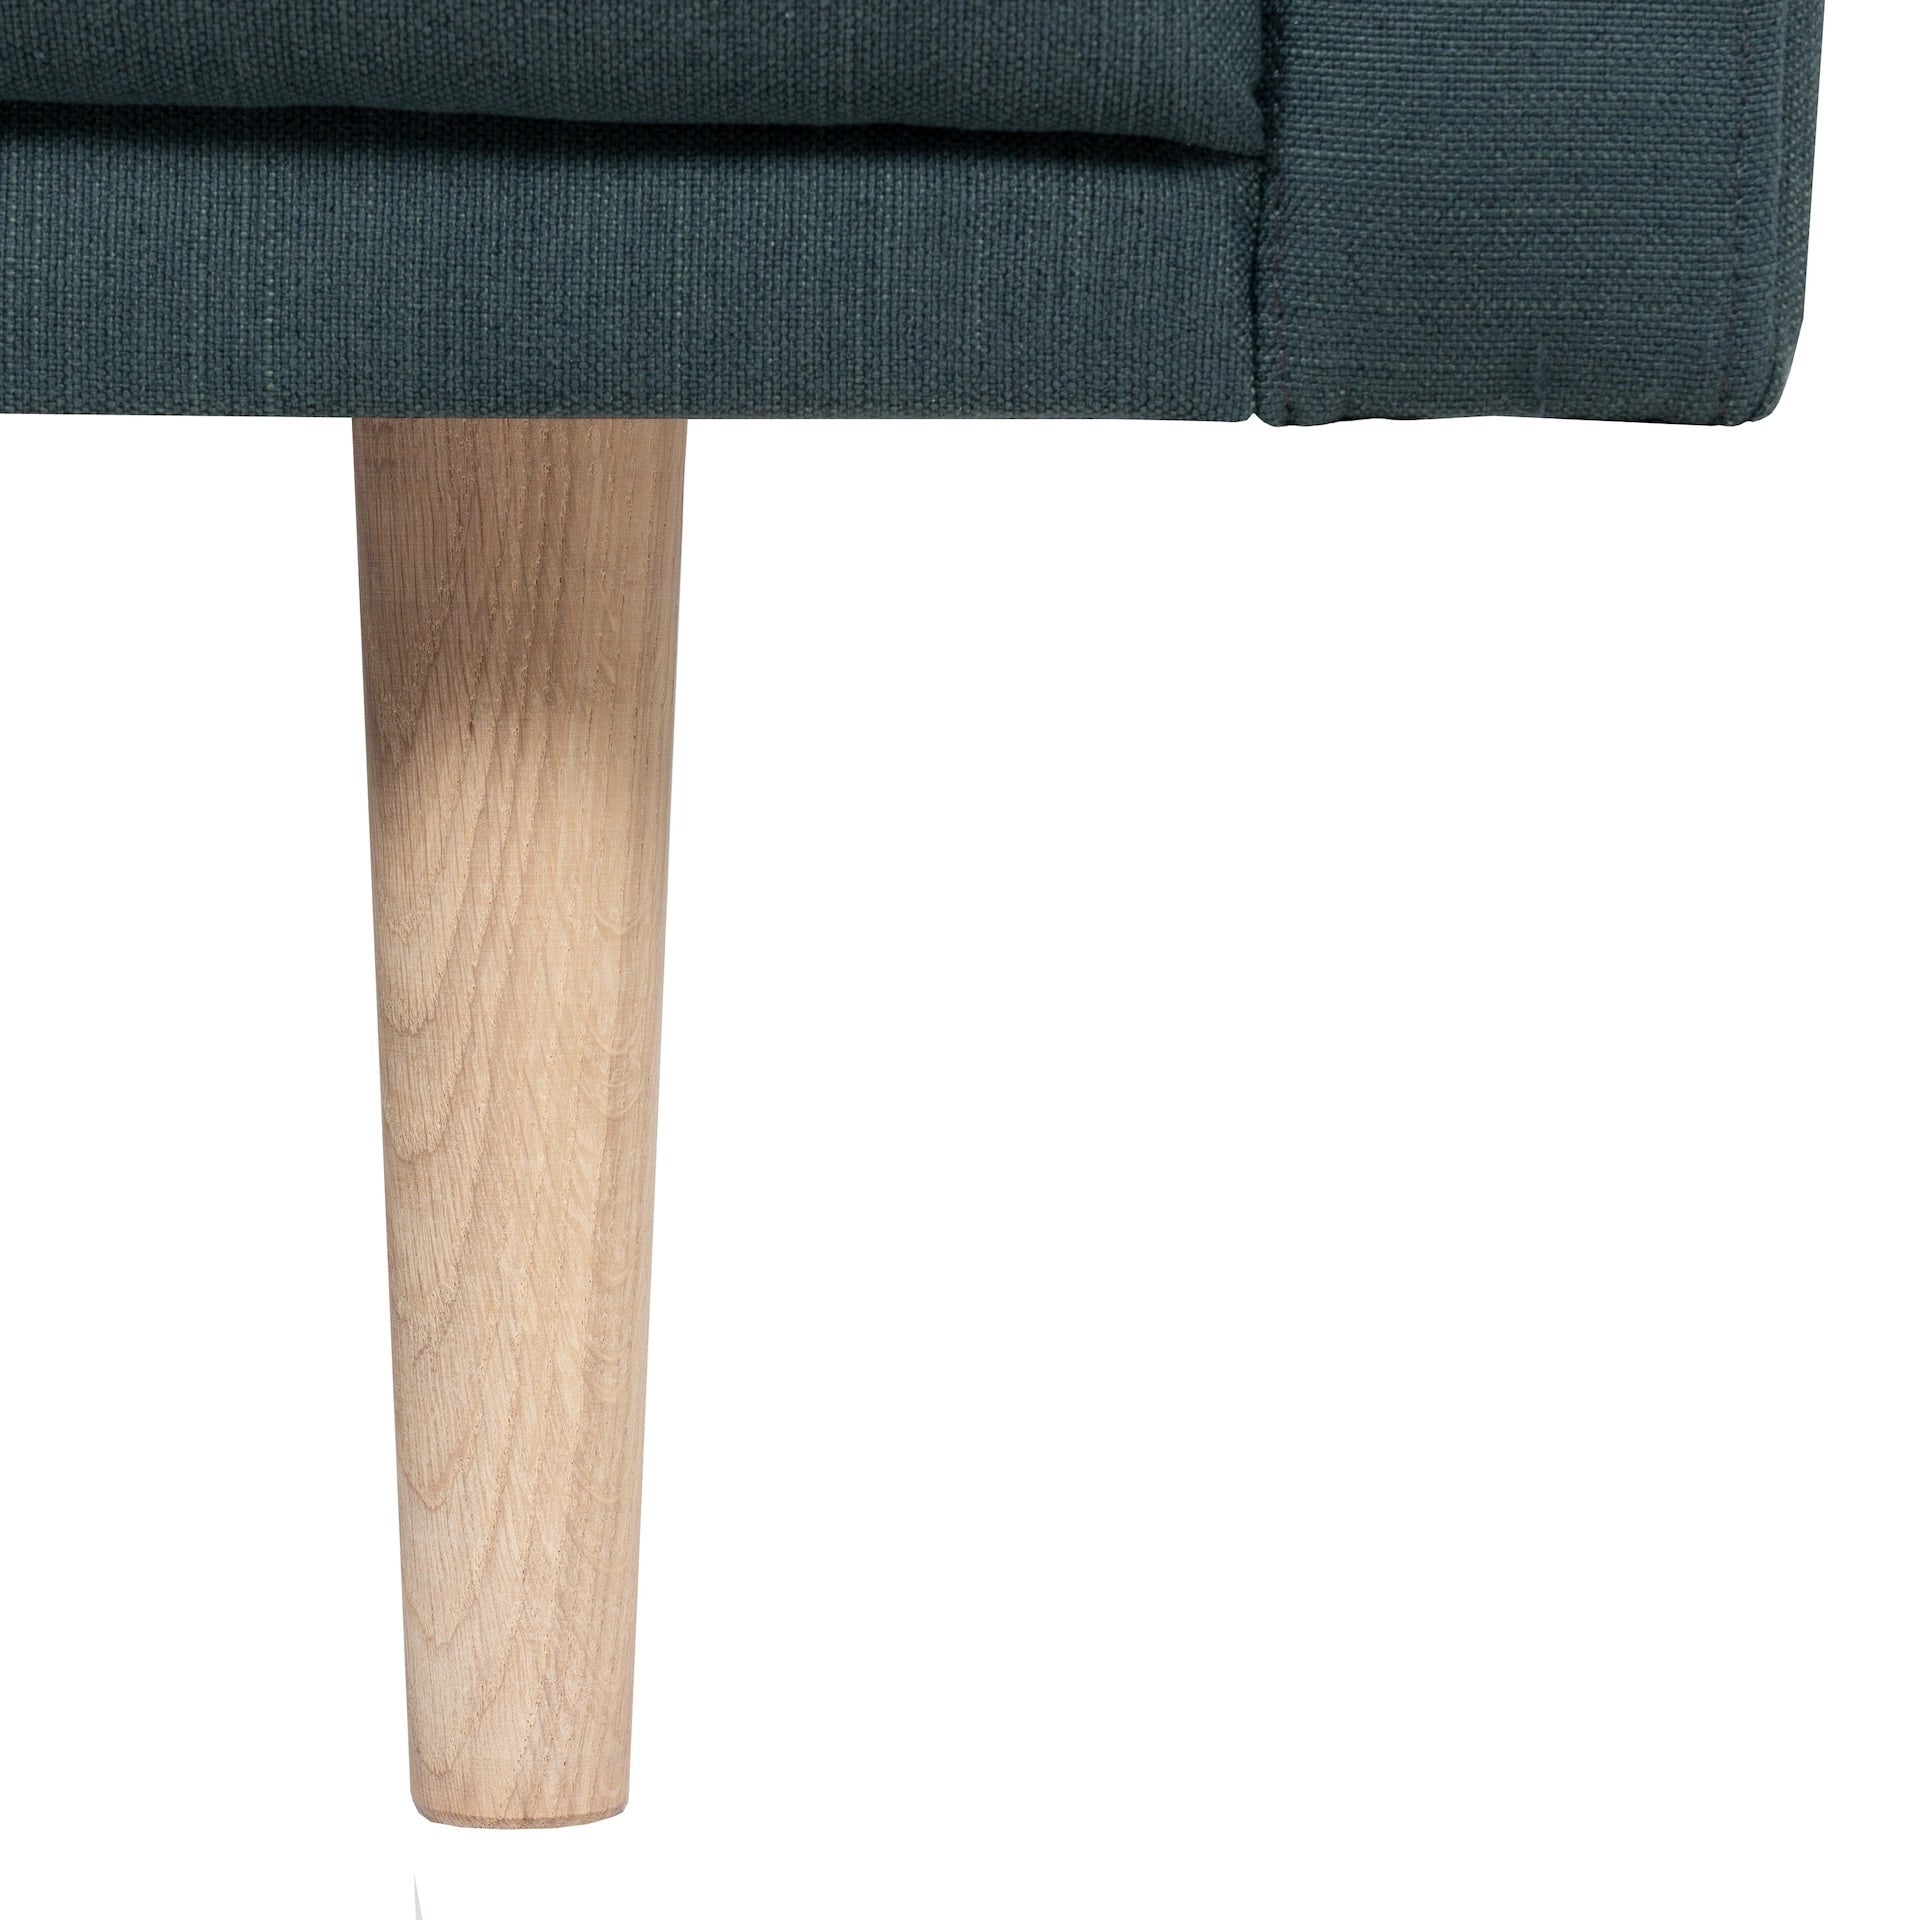 Furniture To Go Larvik 2.5 Seater Sofa - Dark Green, Oak Legs